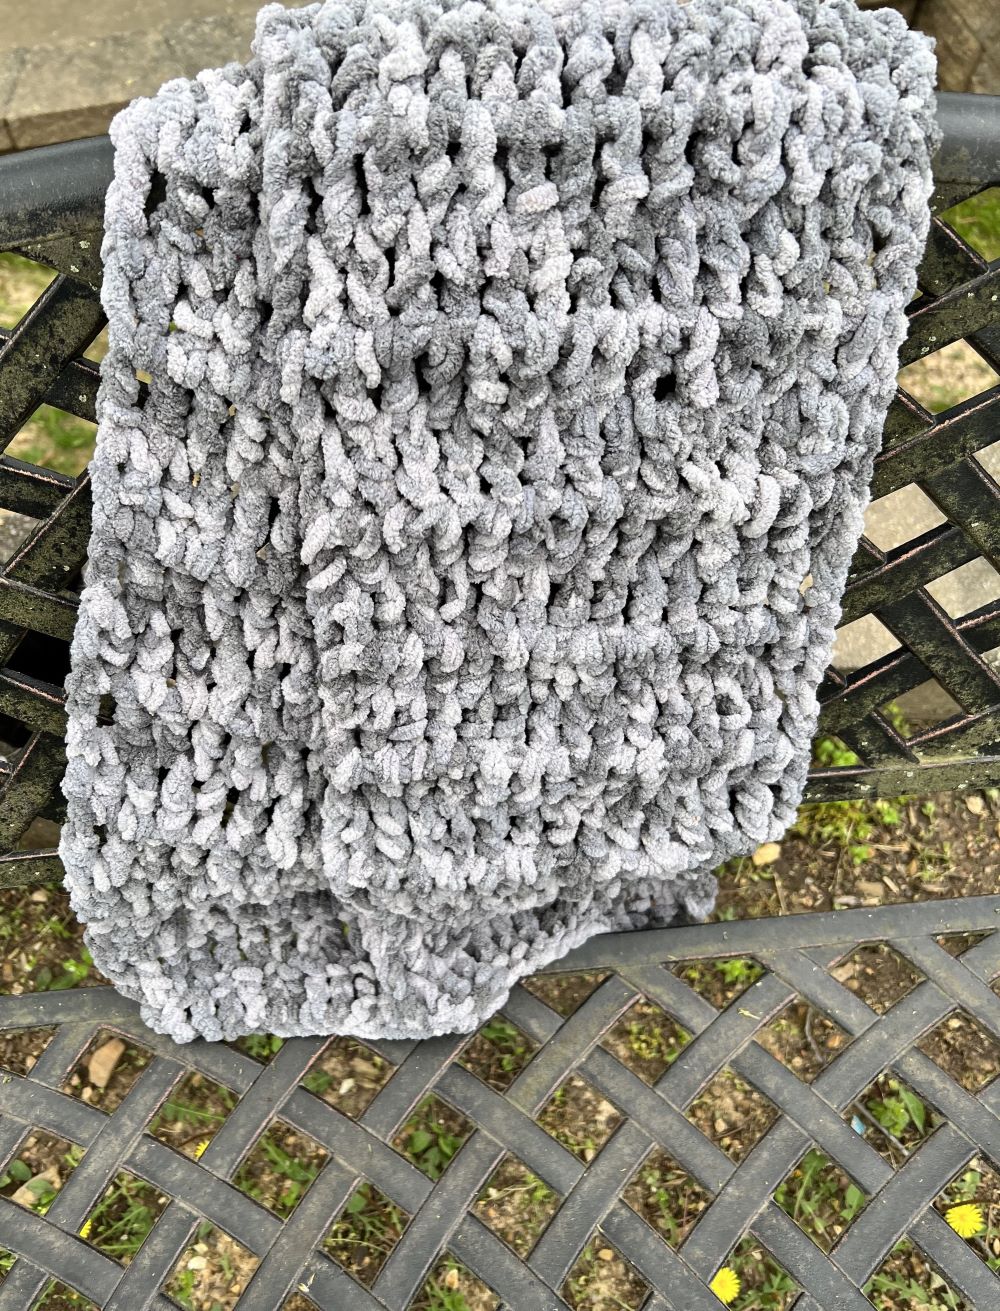 treble crochet